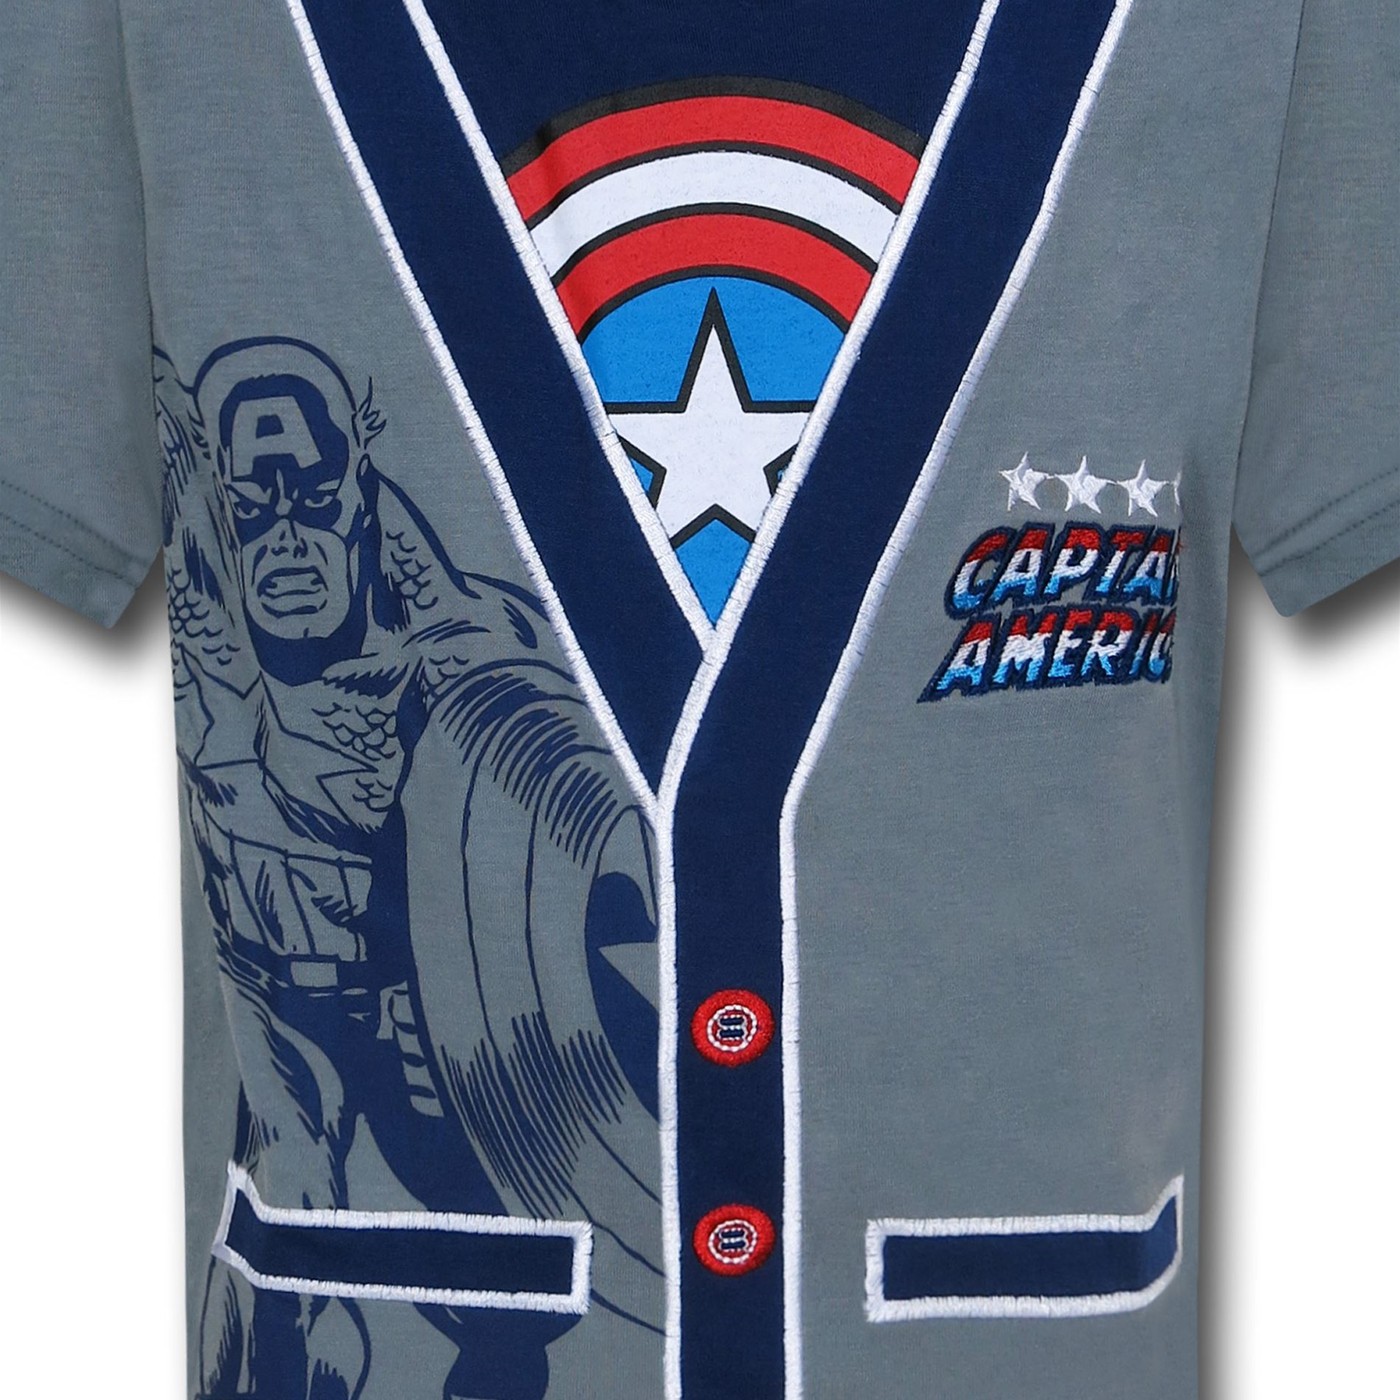 Captain America Kids Cardigan T-Shirt